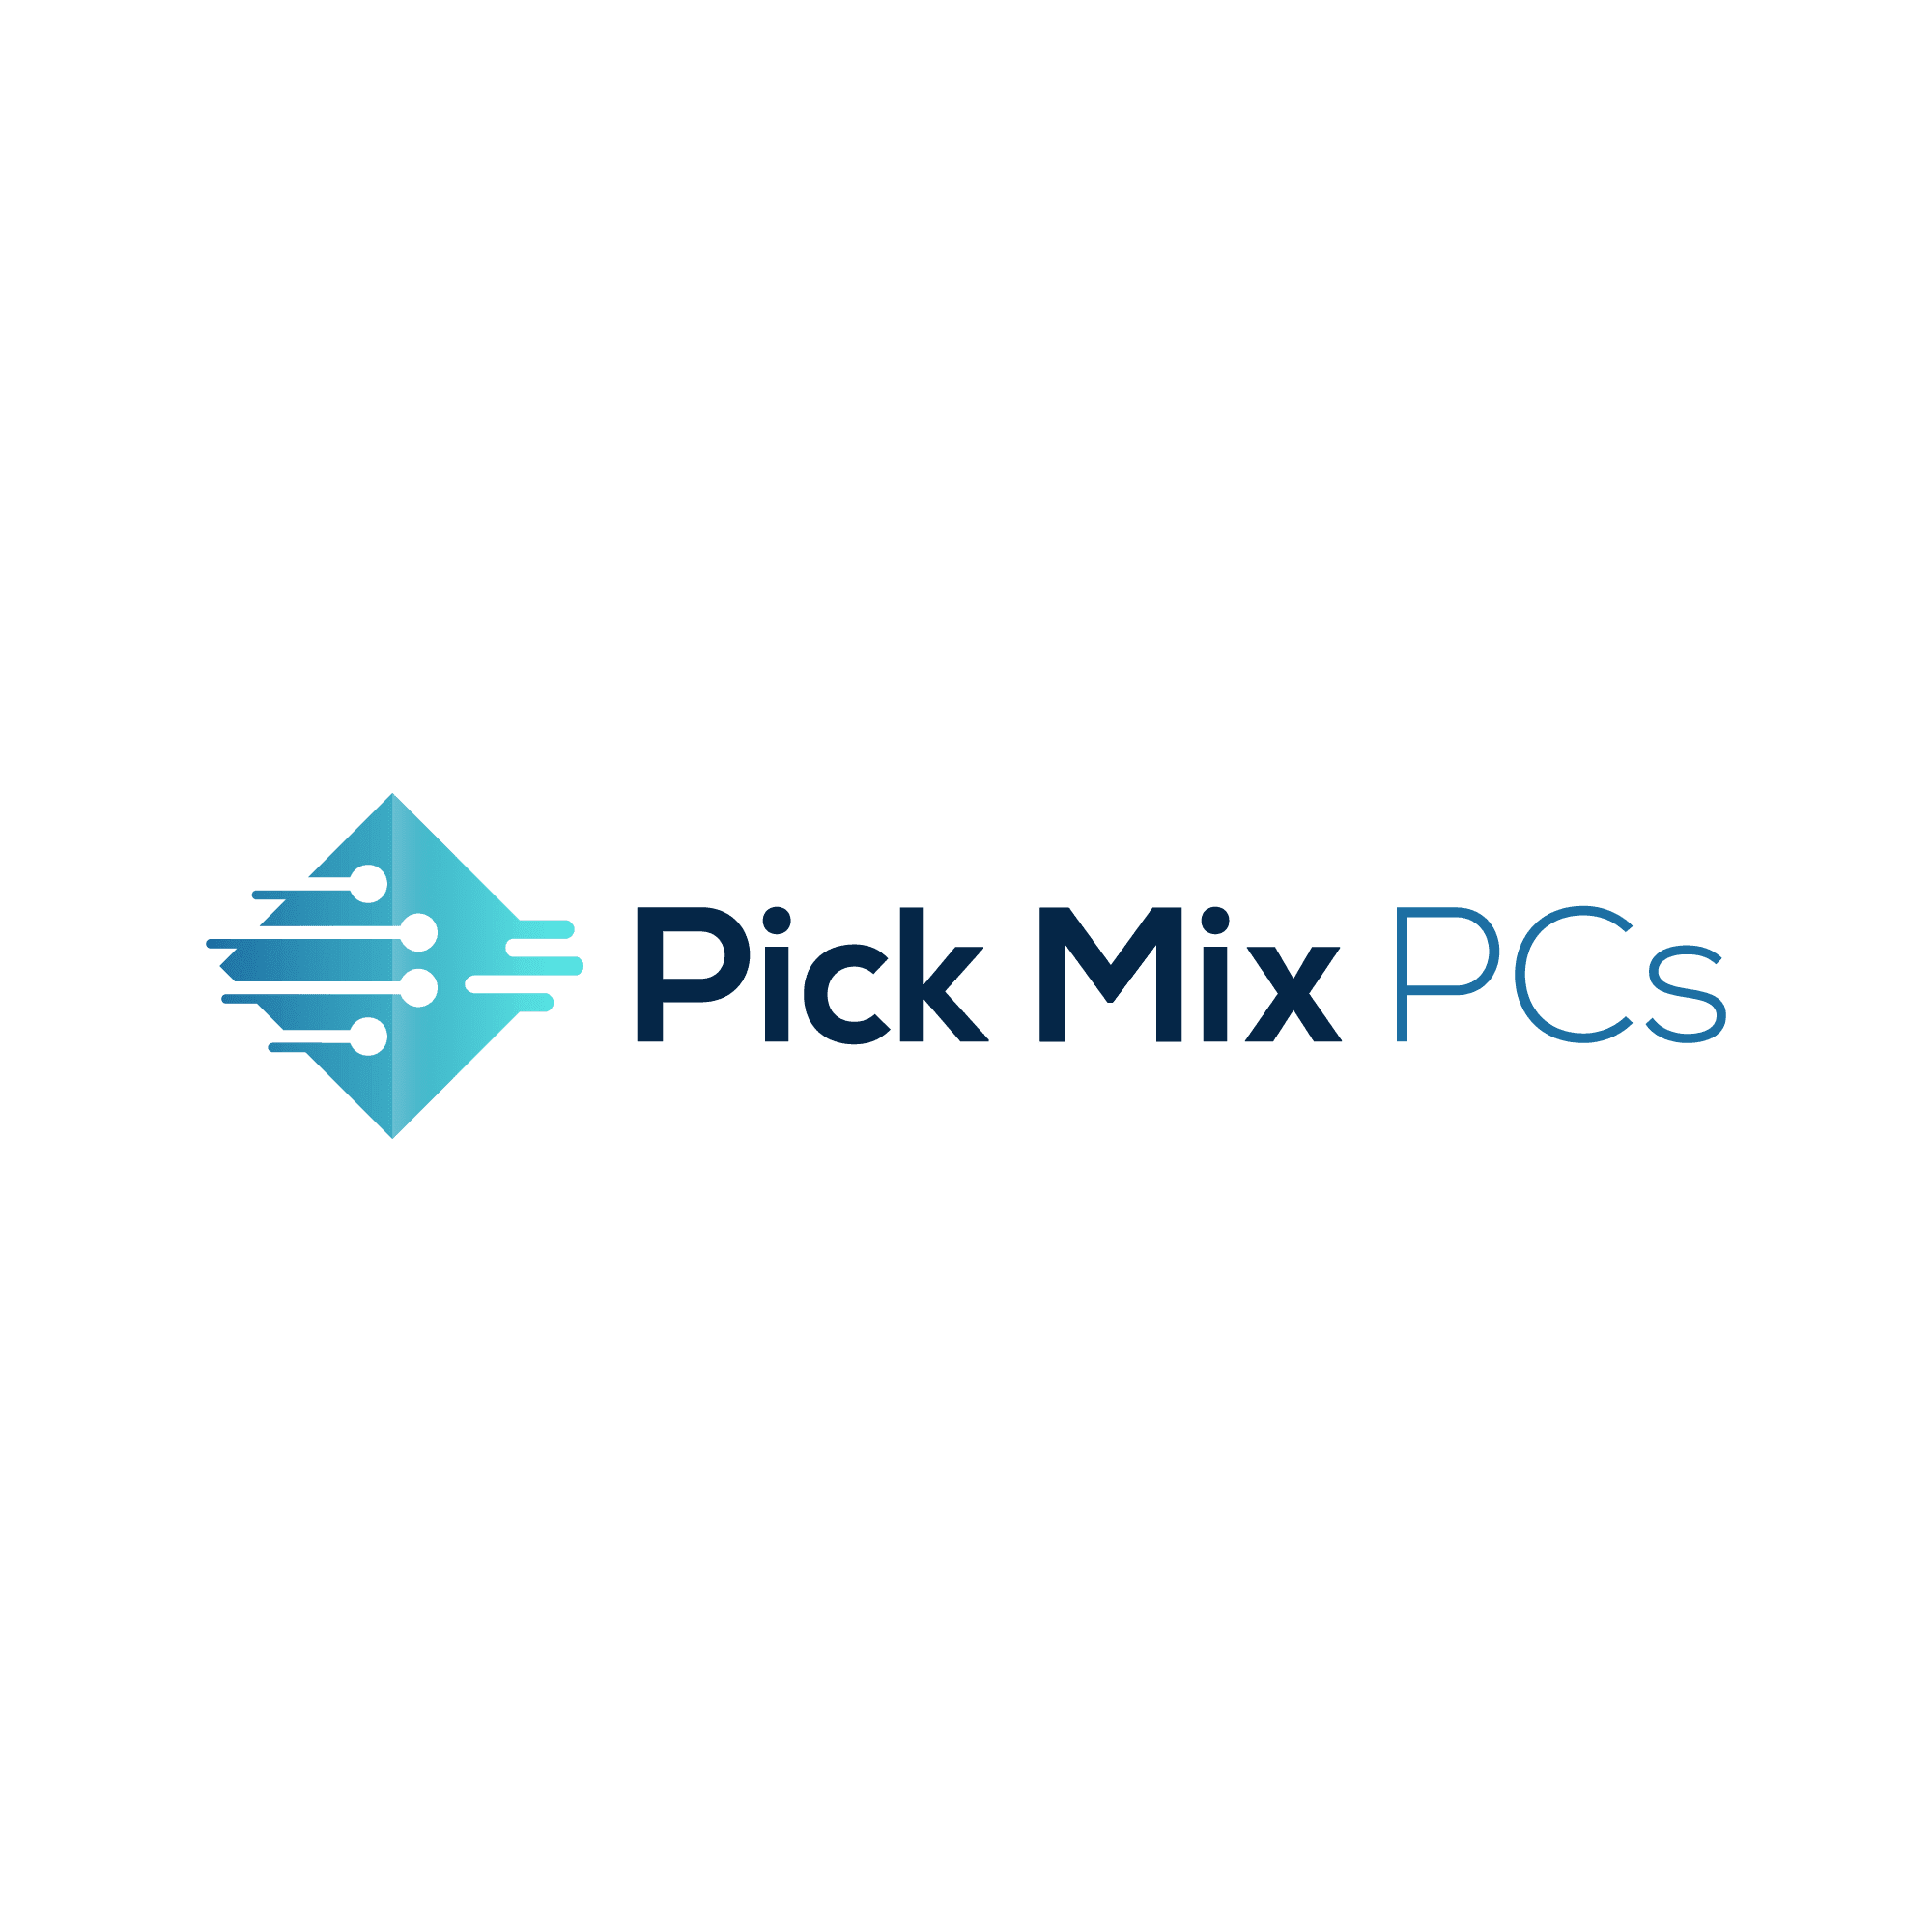 Pick Mix PCs